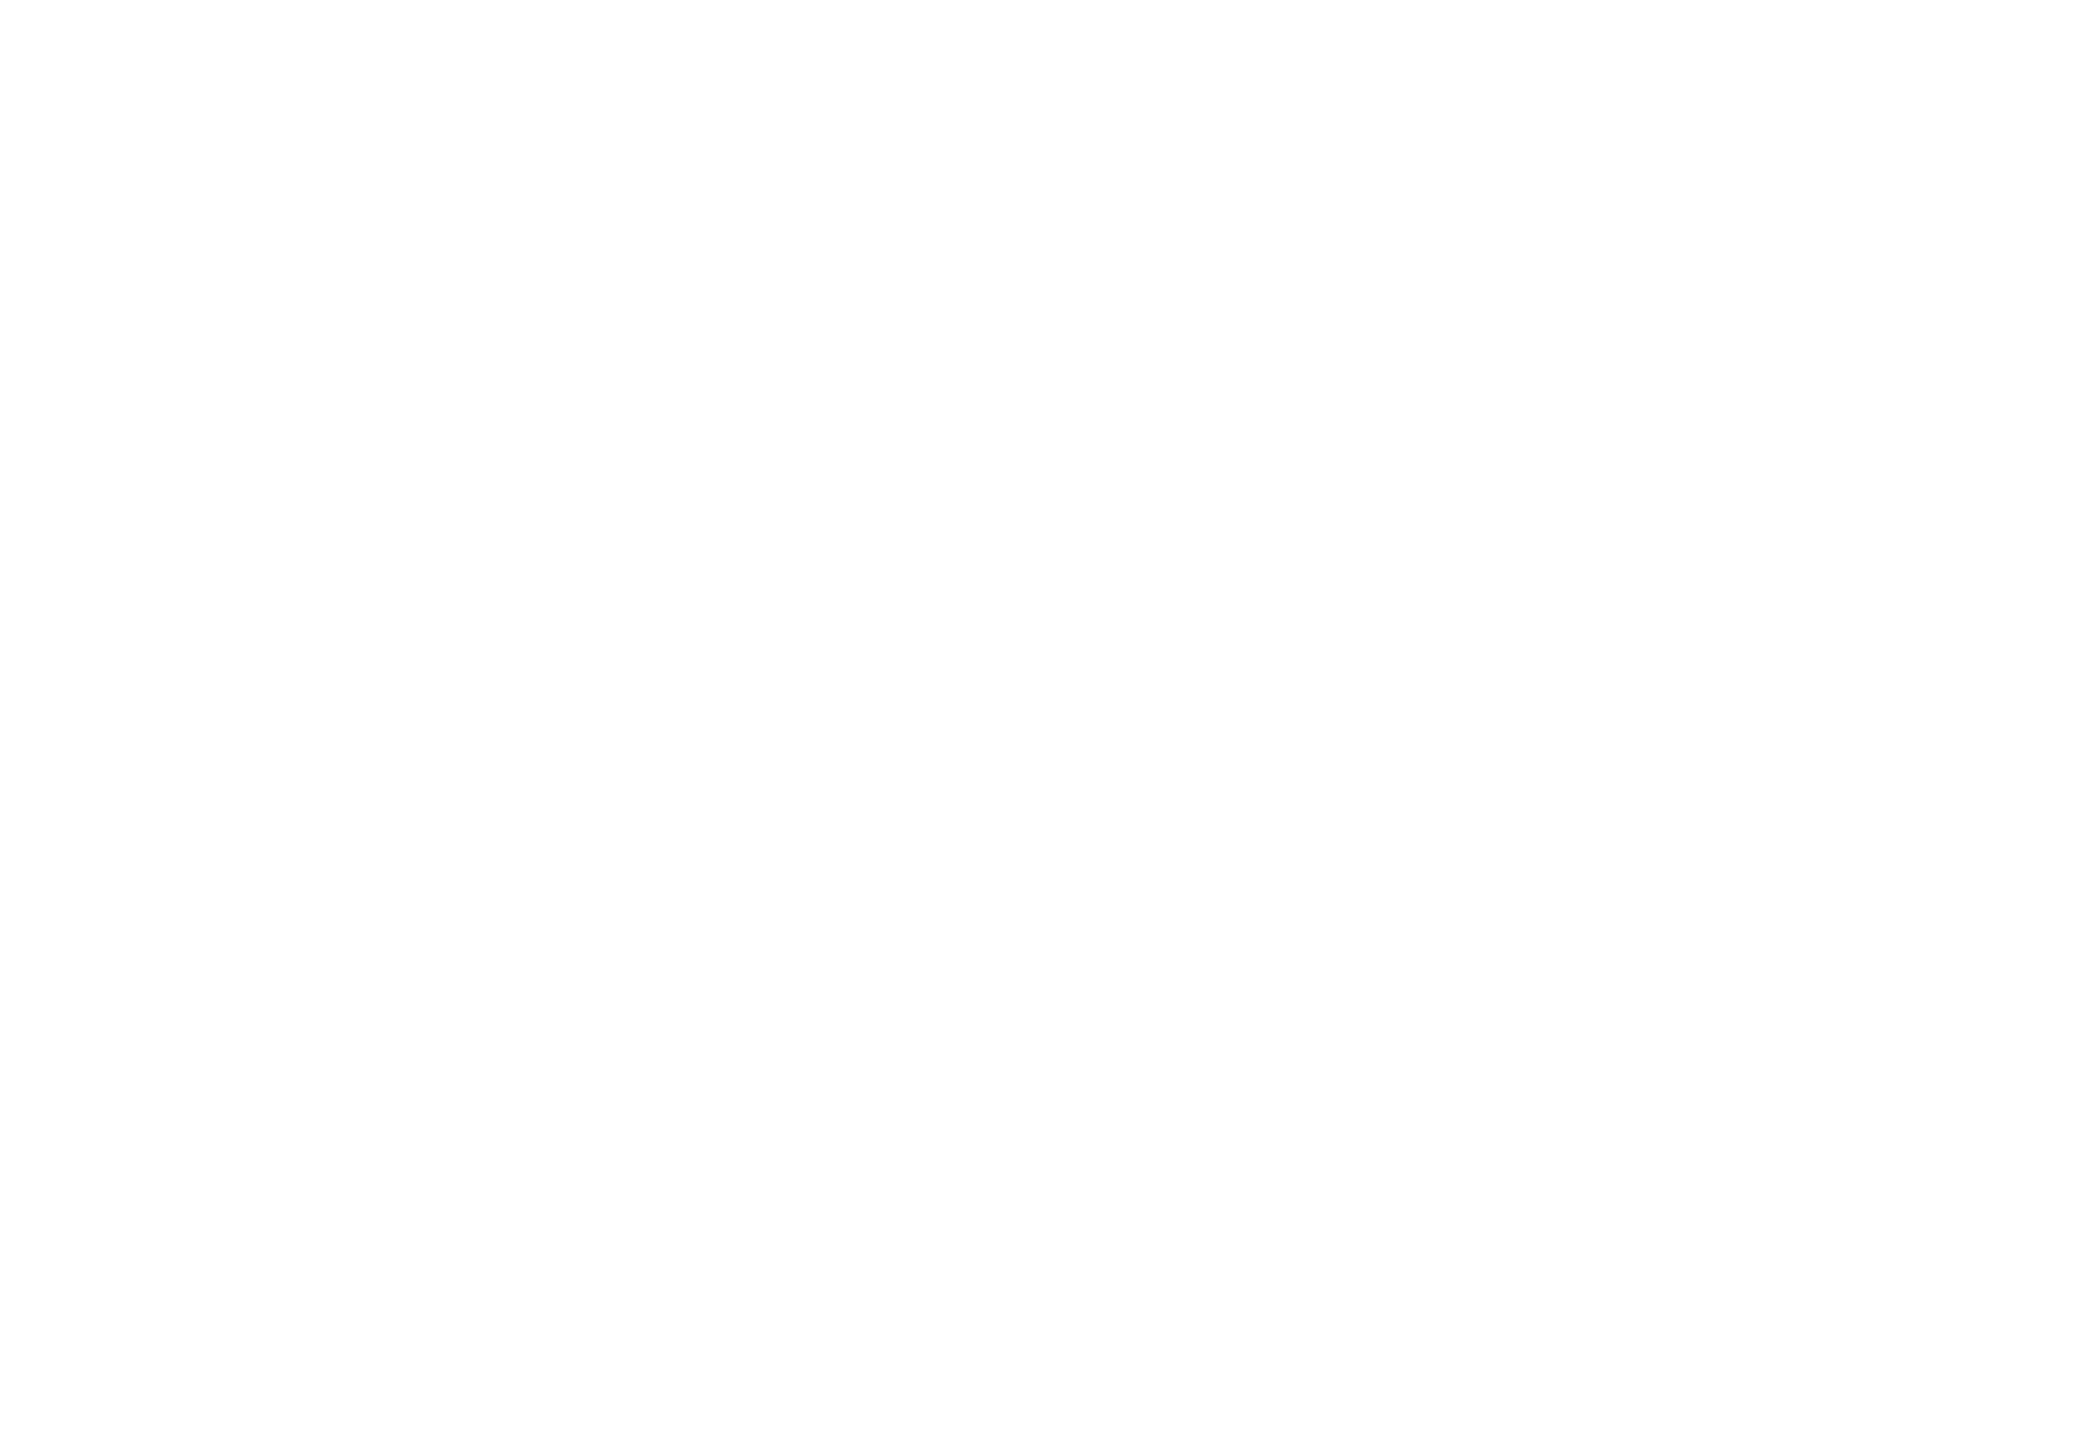 Footness